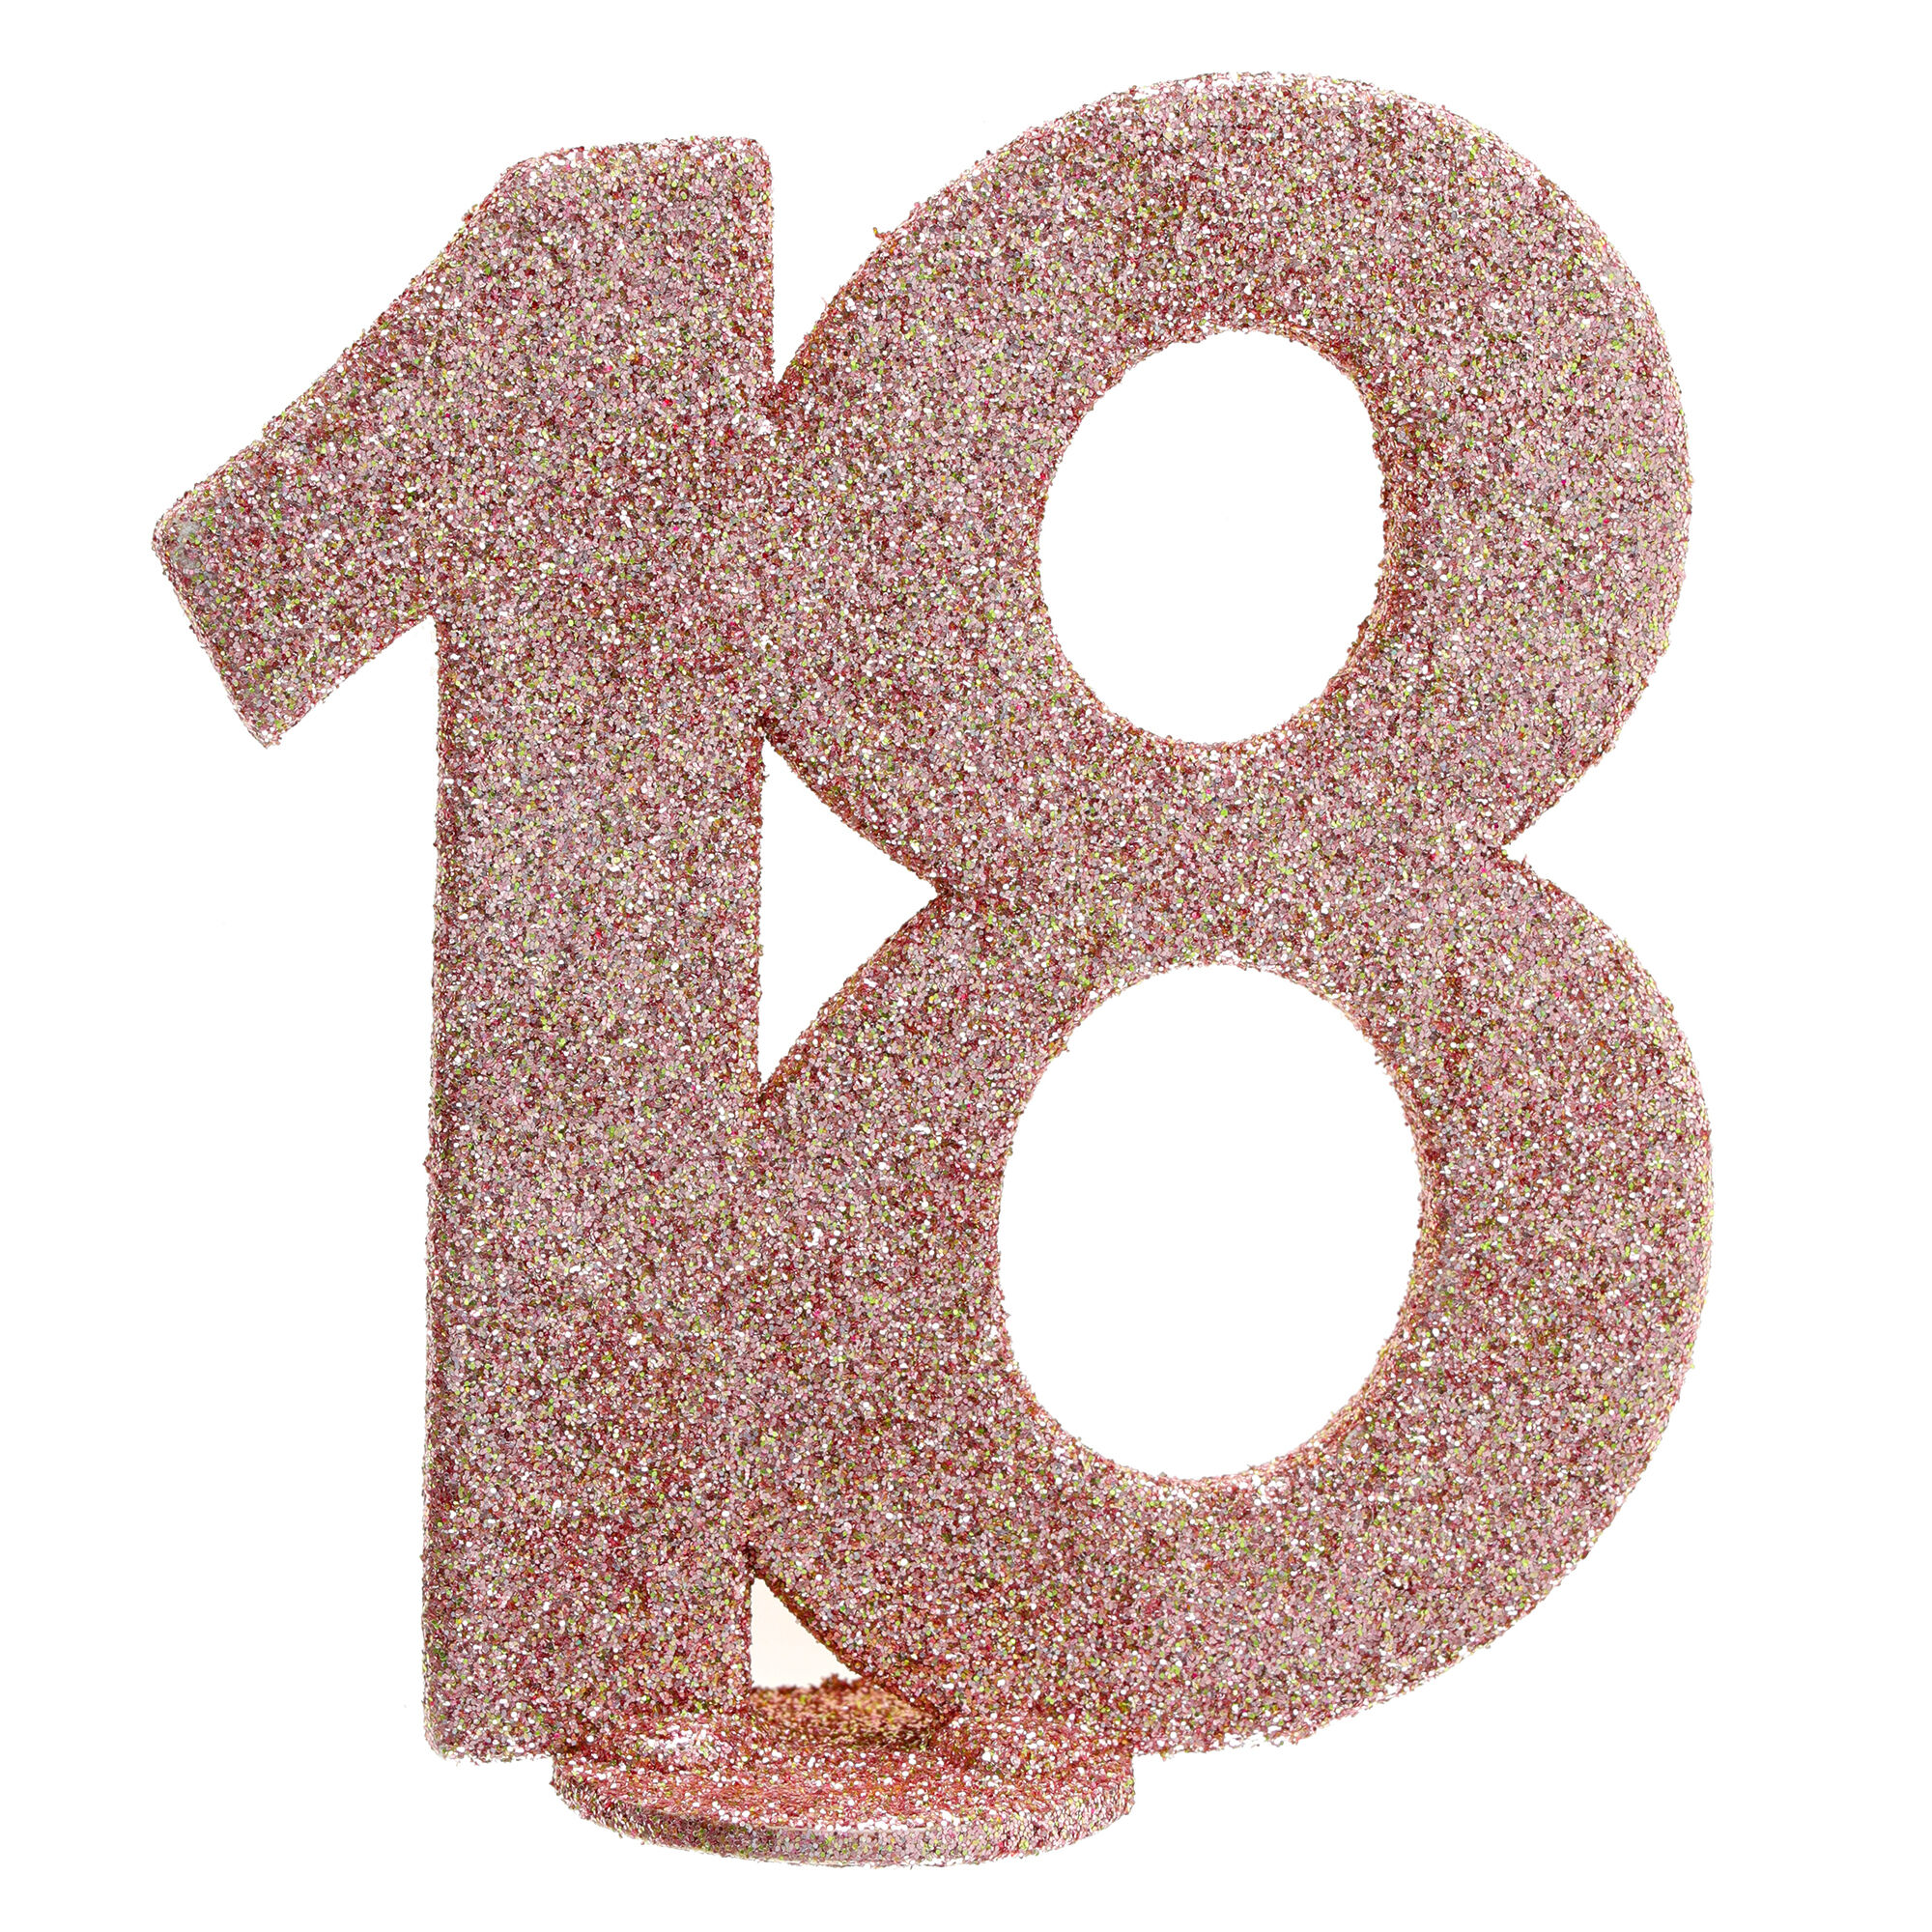 NEU Aufsteller Geburtstags-Zahl 18, glitter-rosé-gold, ca. 10cm